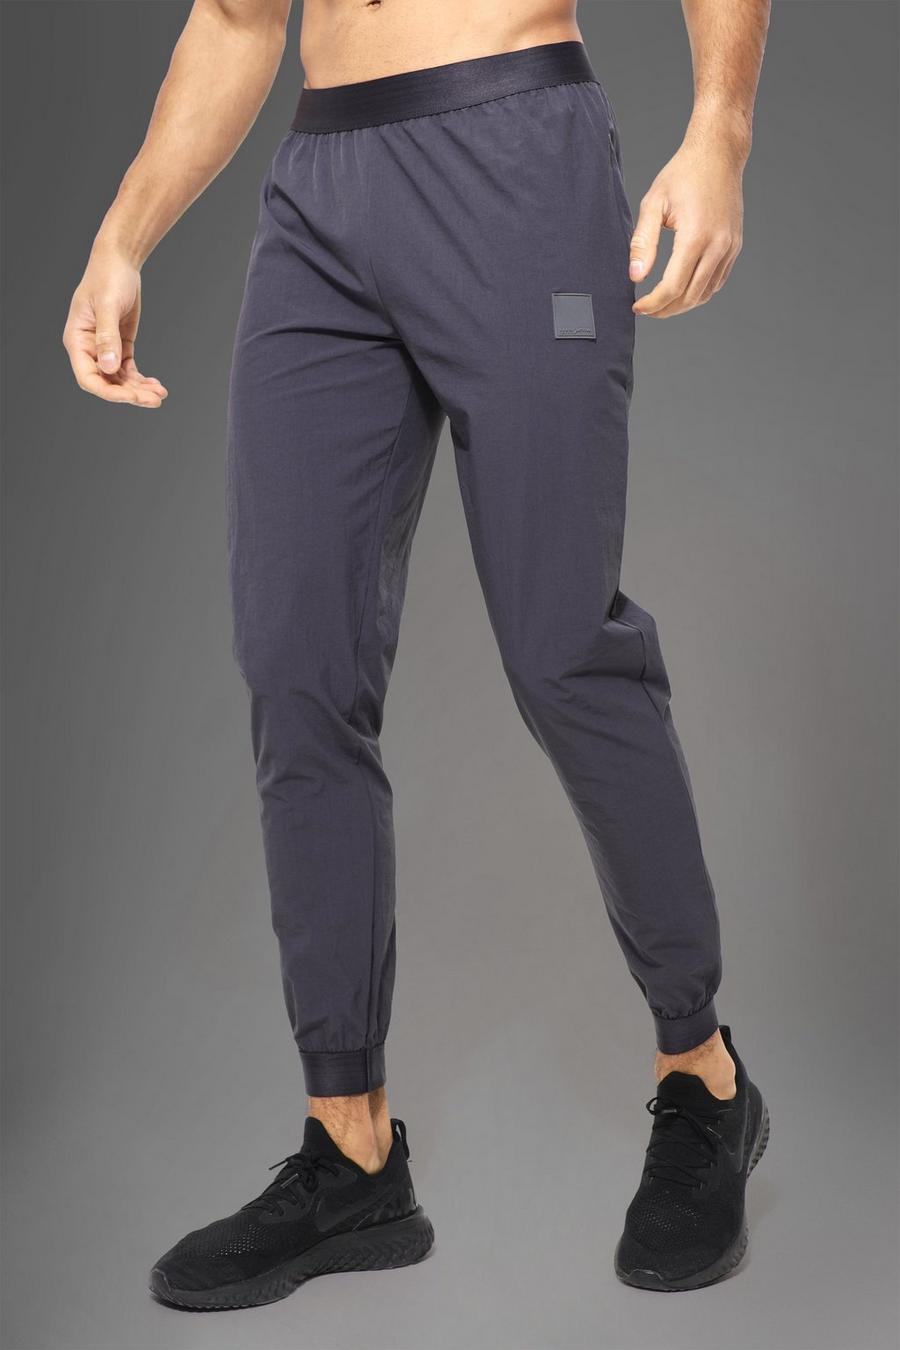 Pantaloni tuta Man Active Gym in nylon, Charcoal grigio